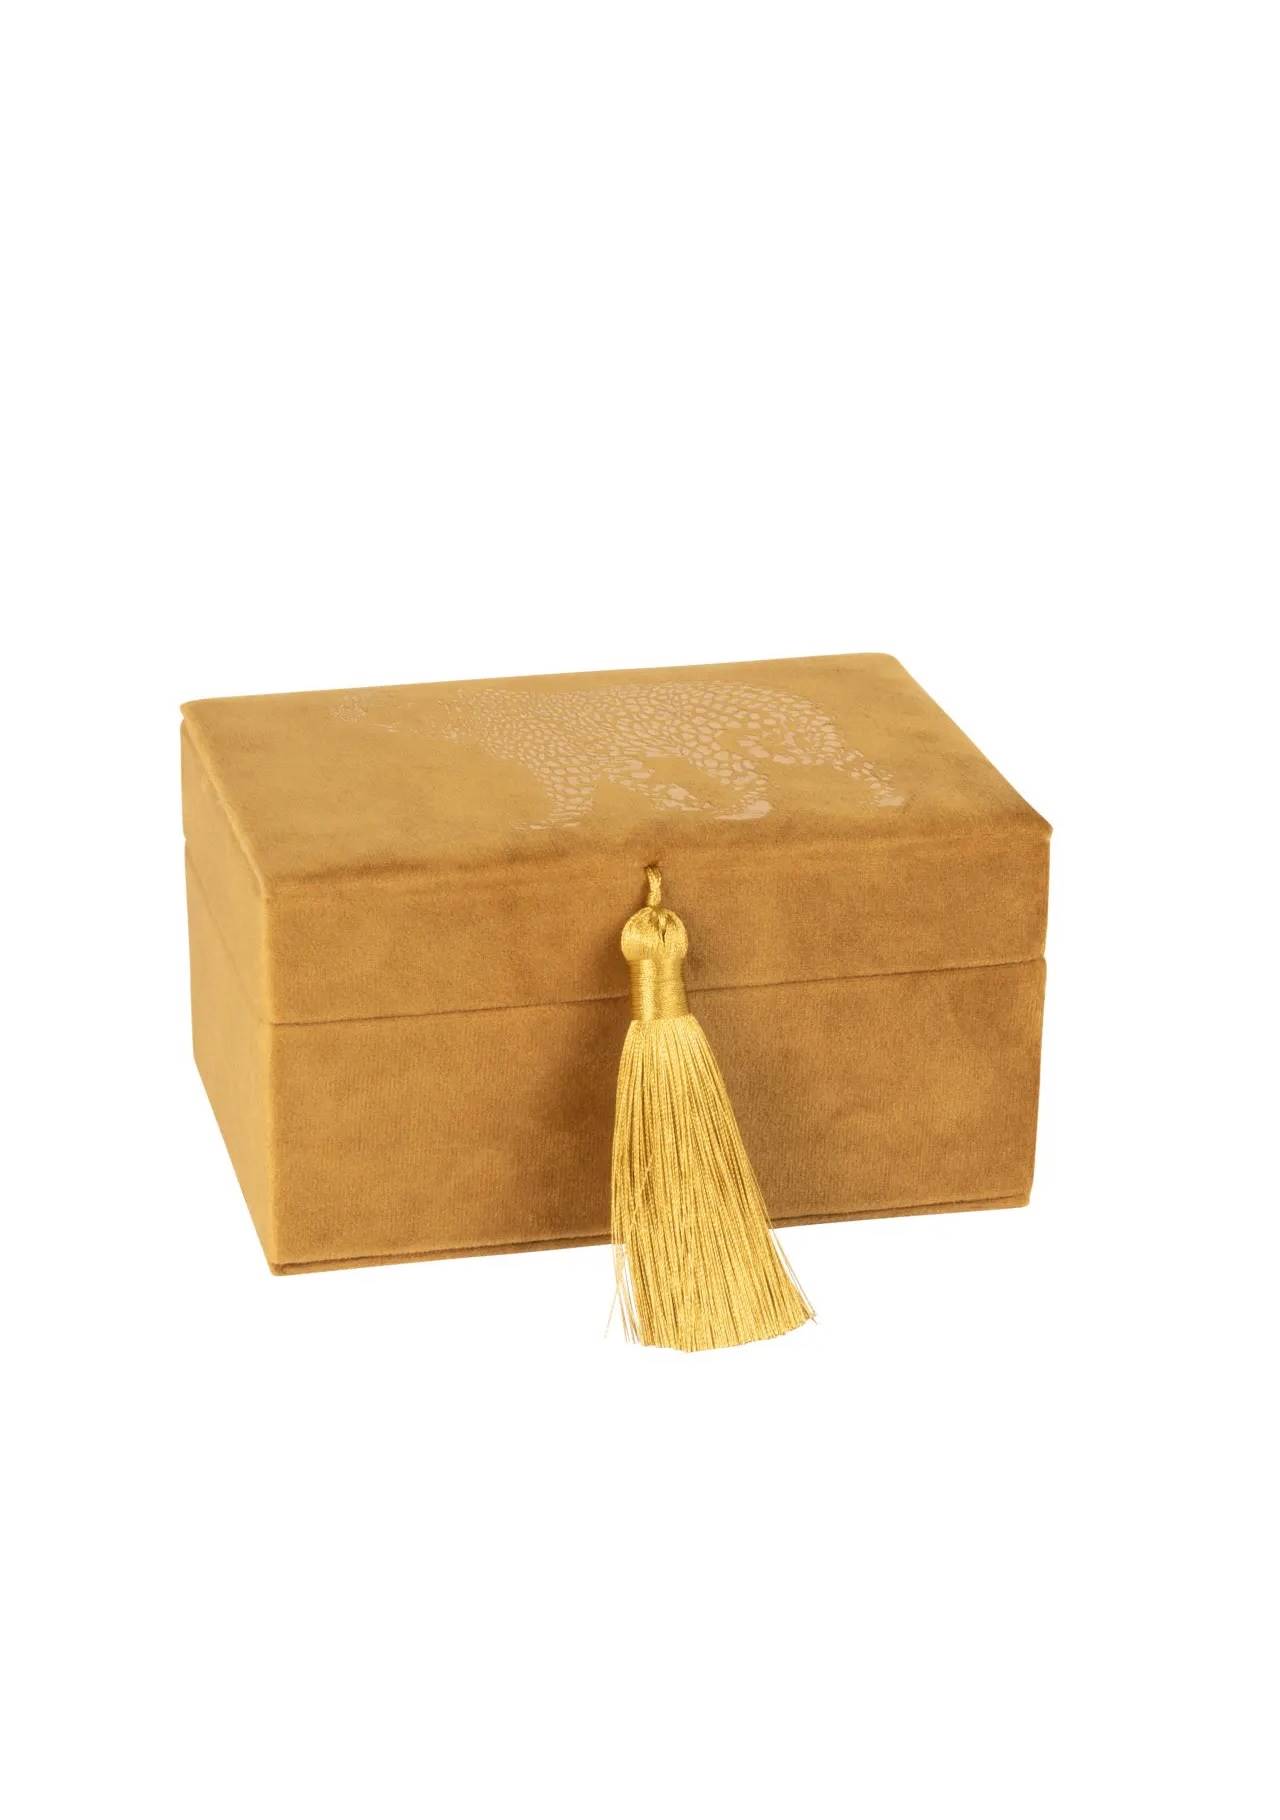 piezas deco baratas joyero de terciopelo amarillo mostaza Maisons du Monde, 14,99€